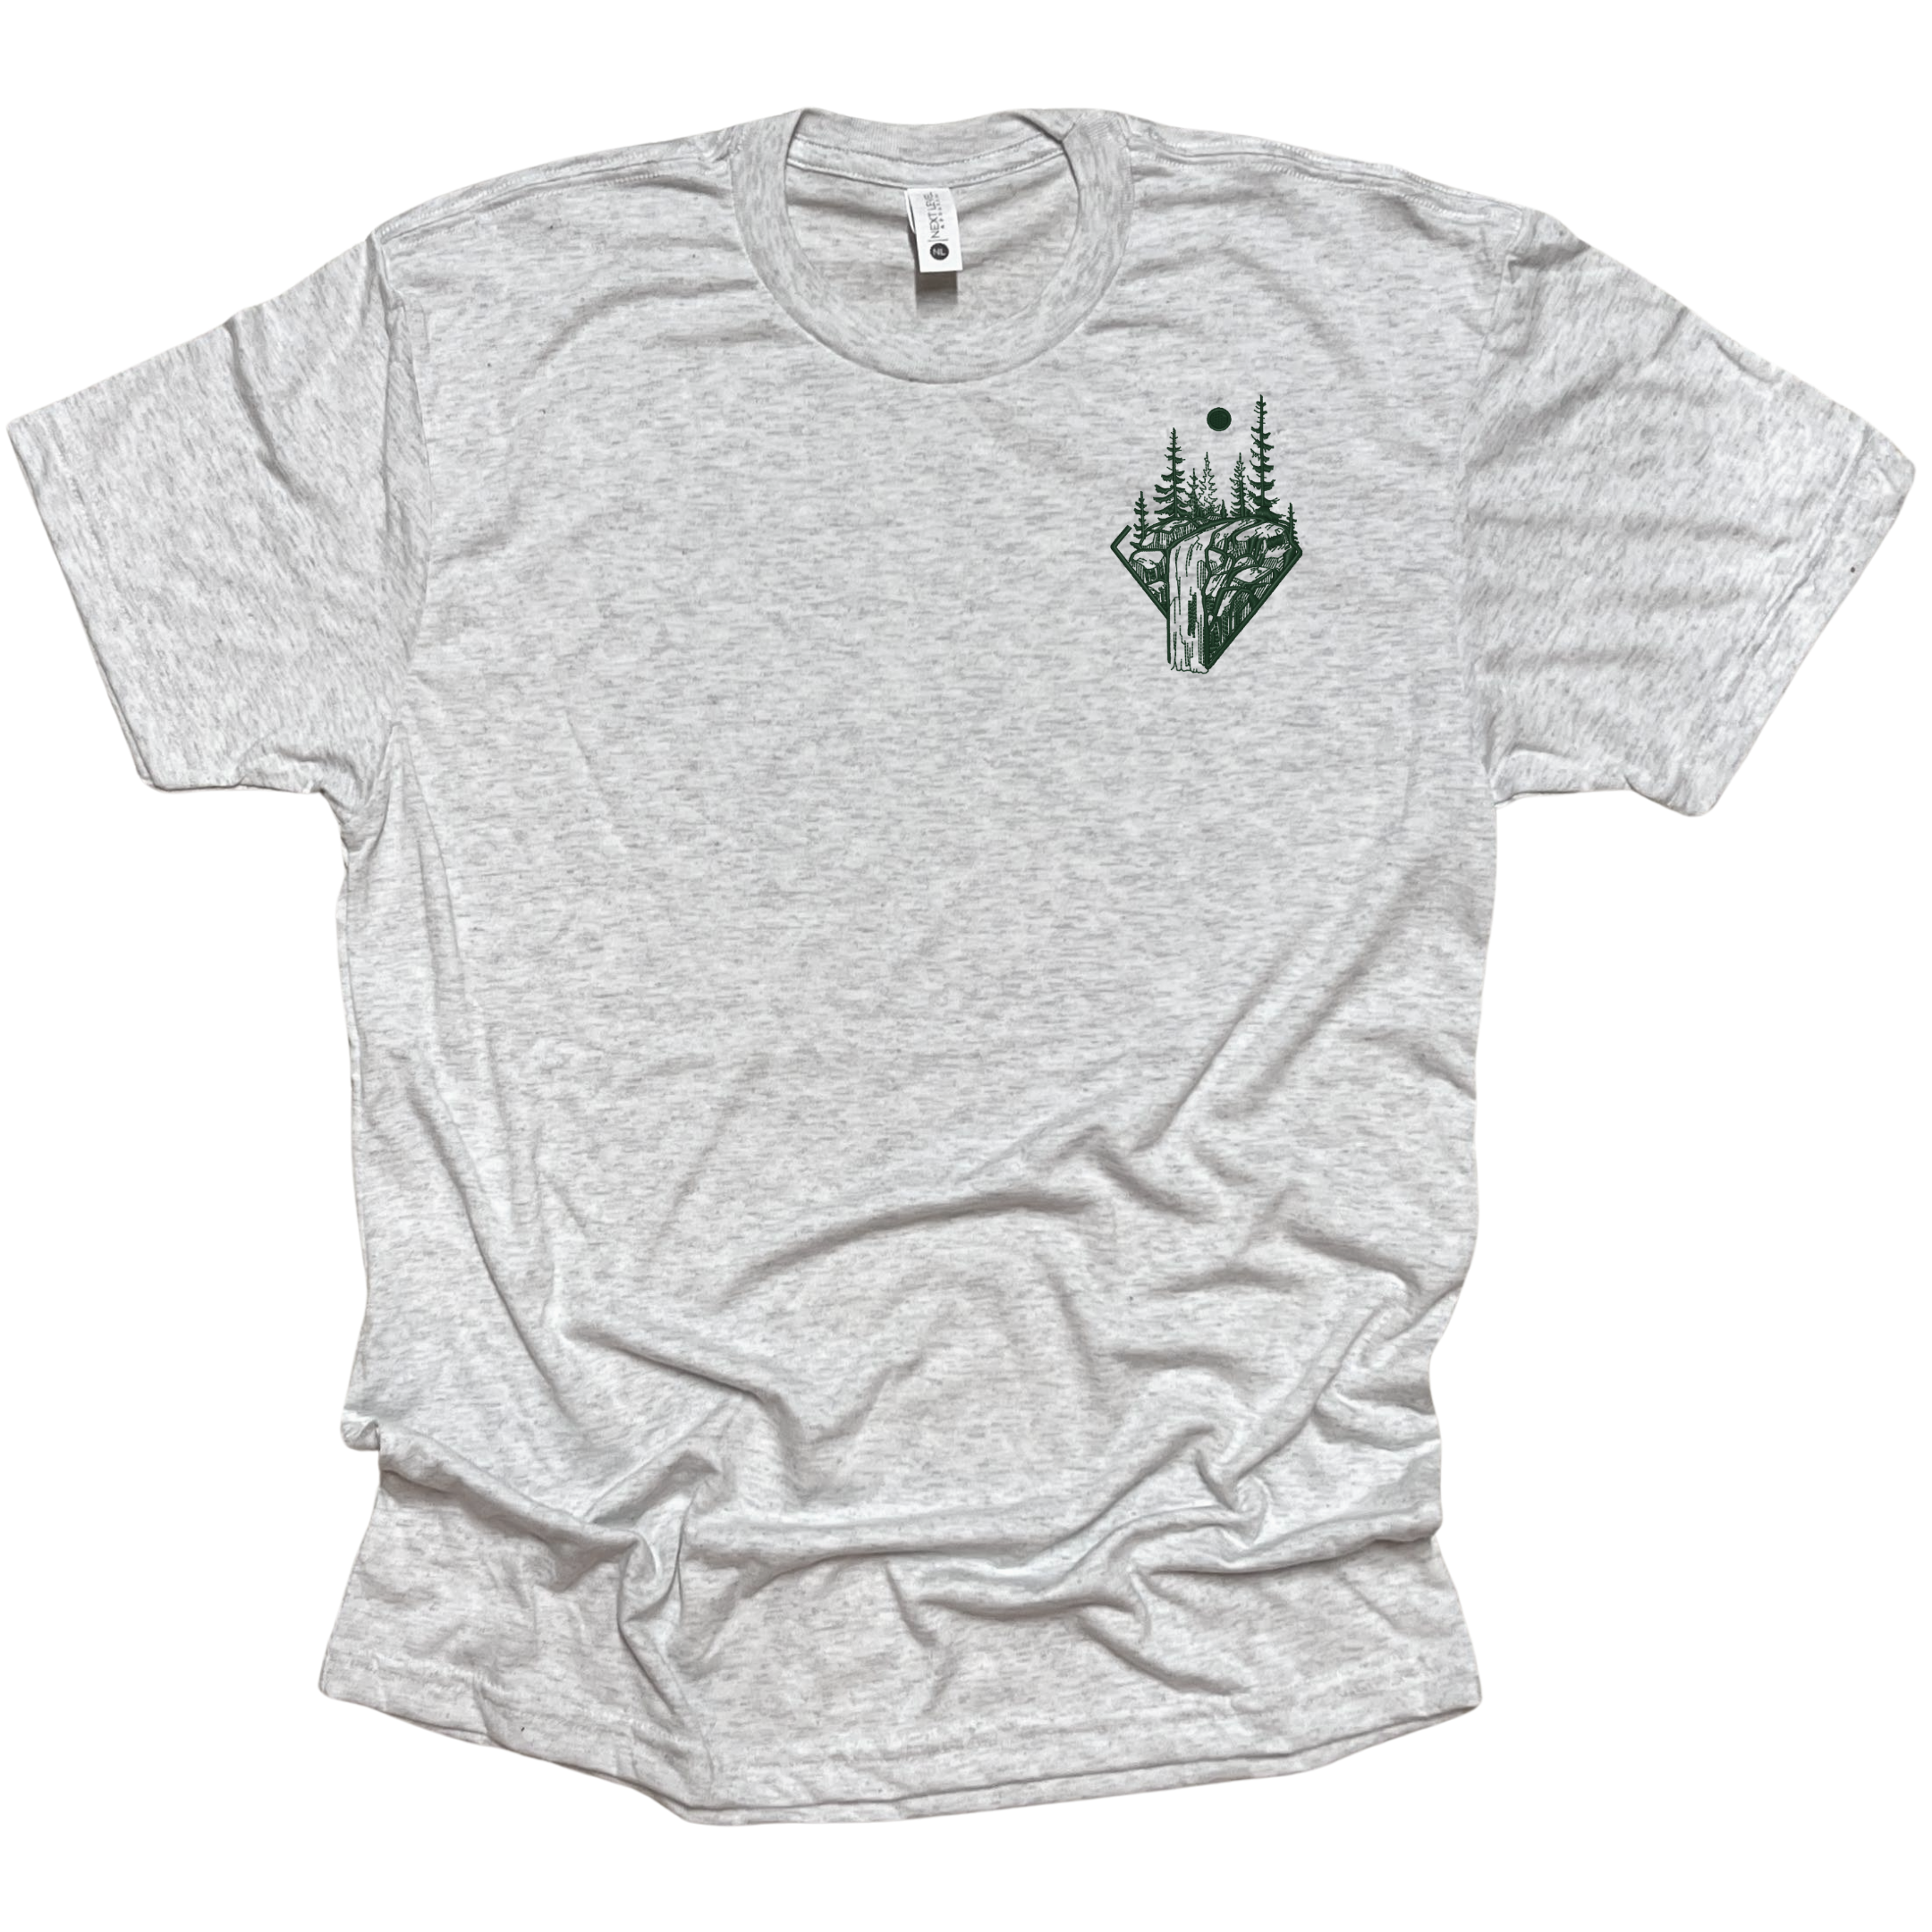 Pacific Northwest Waterfall Embroidered Tee Shirt, Unisex